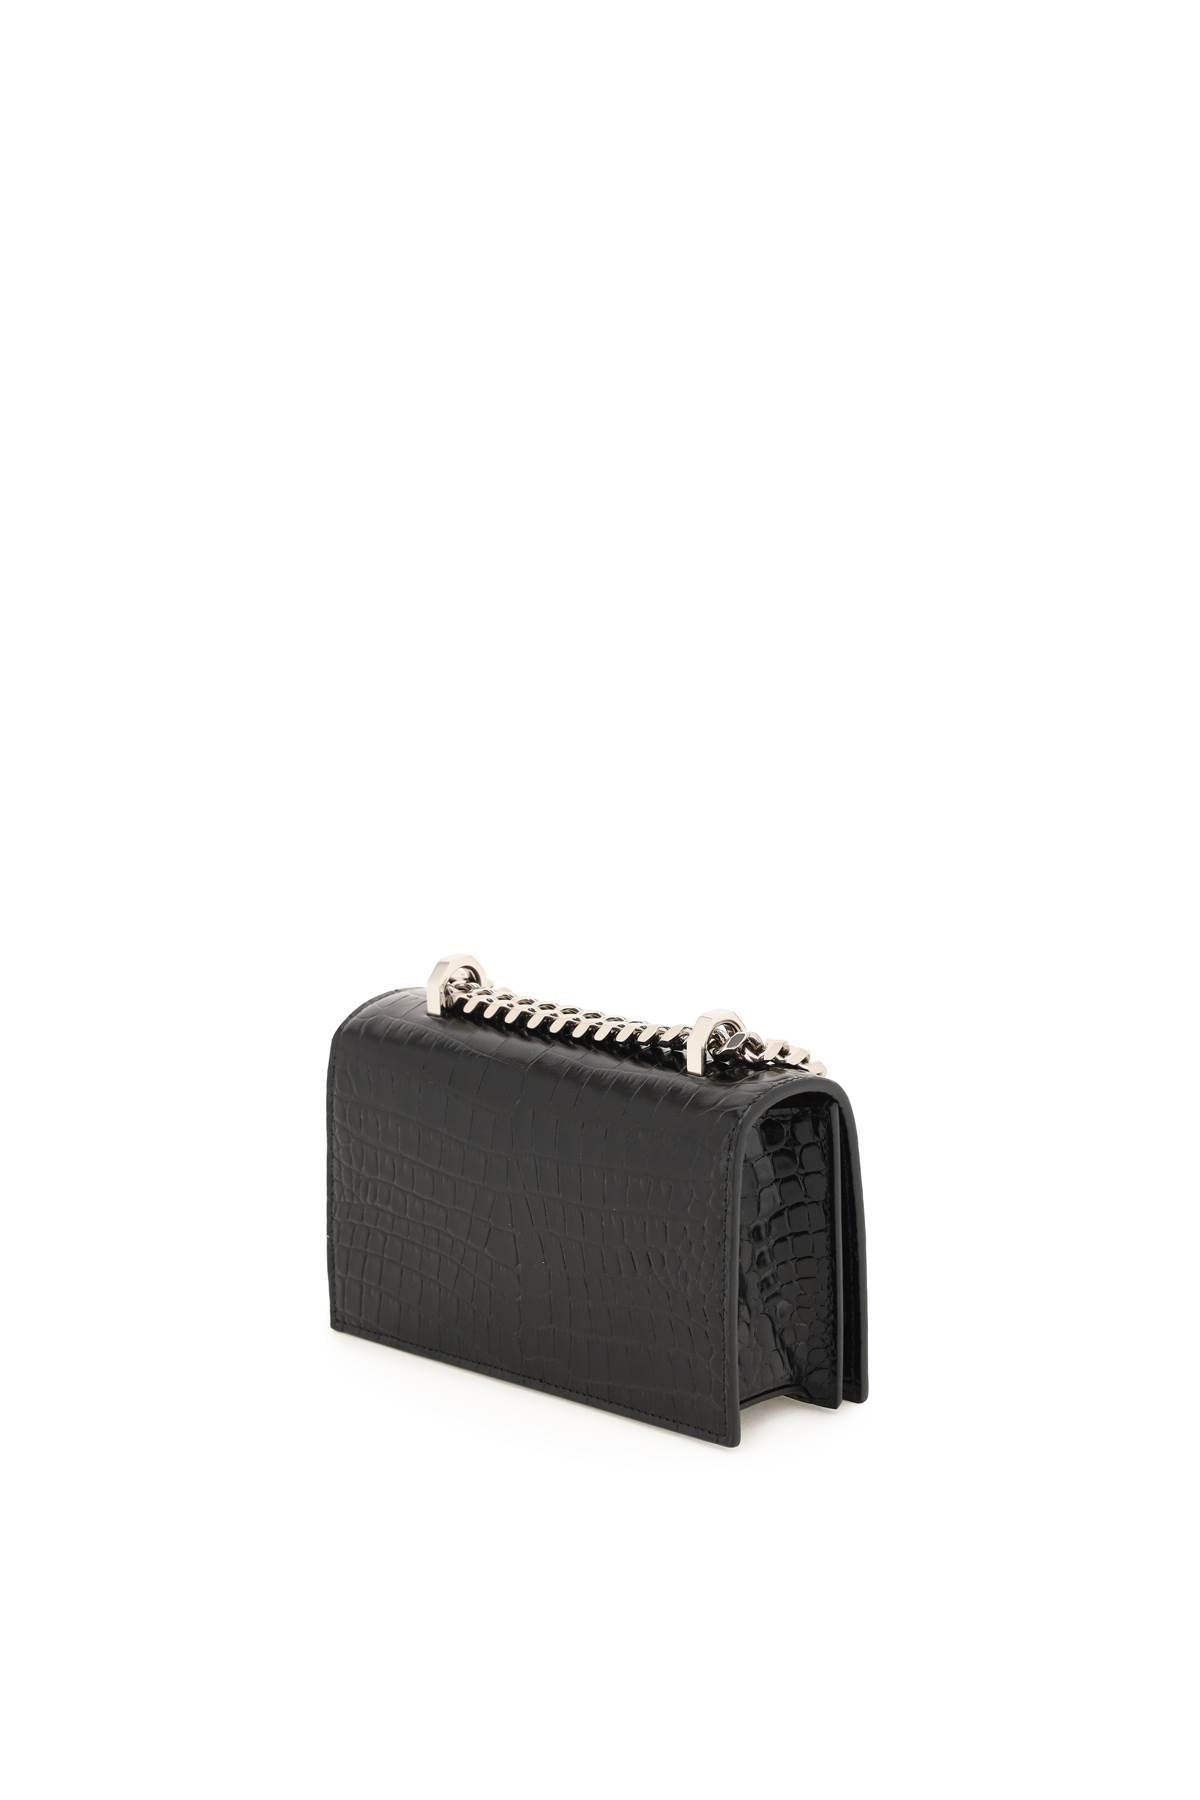 Jewelled Satchel Mini Handbag in Black Calf Leather for Women